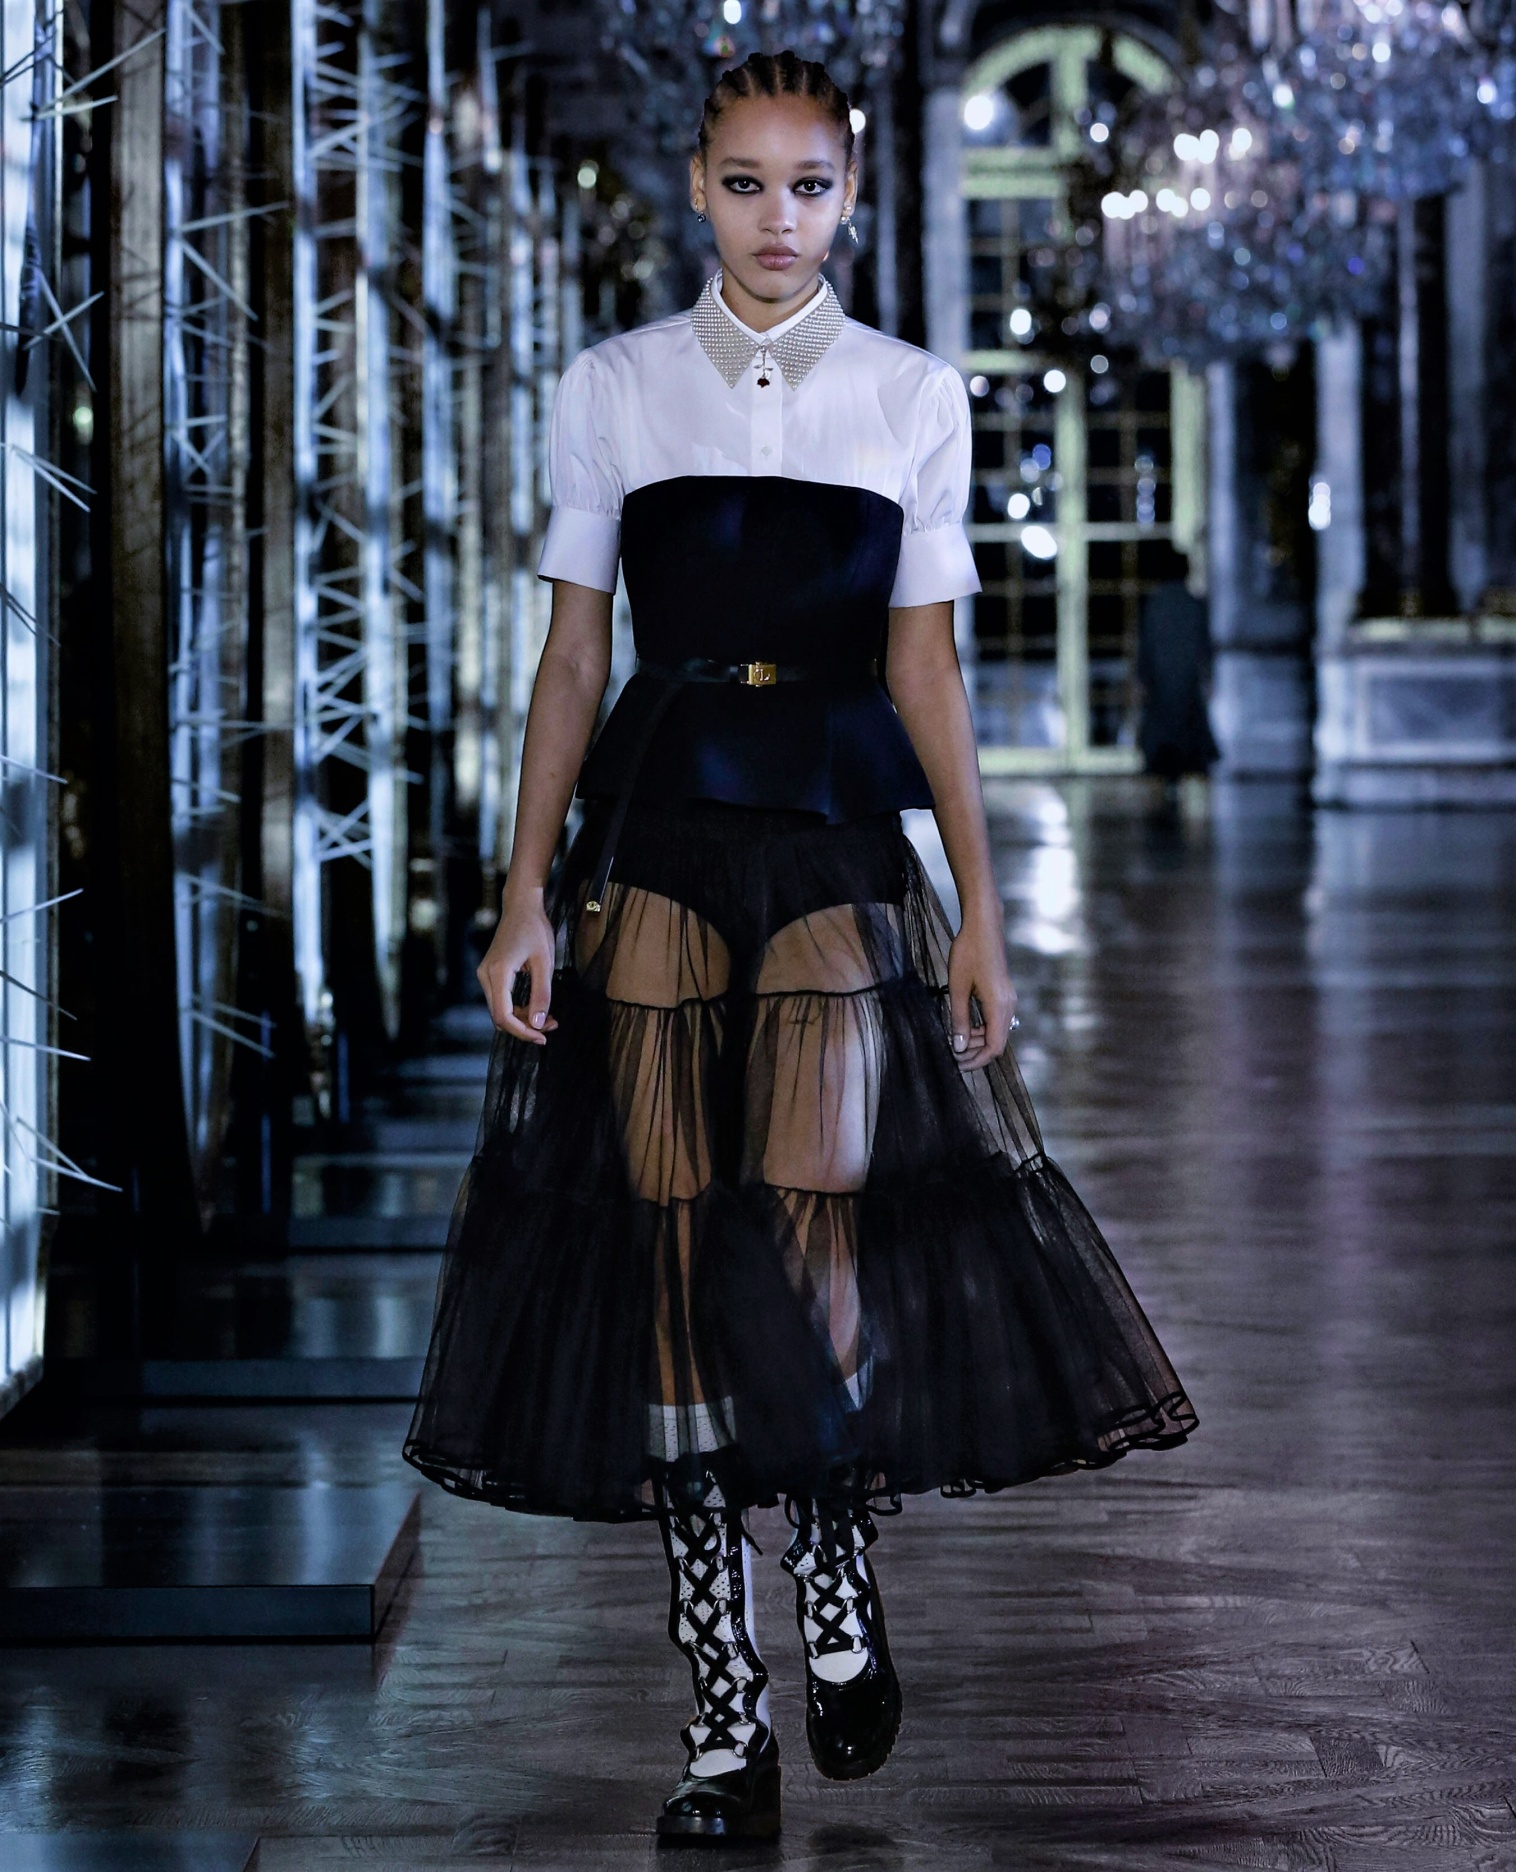 Christian Dior sheer skirt vogue Paris 2 cropped.jpg